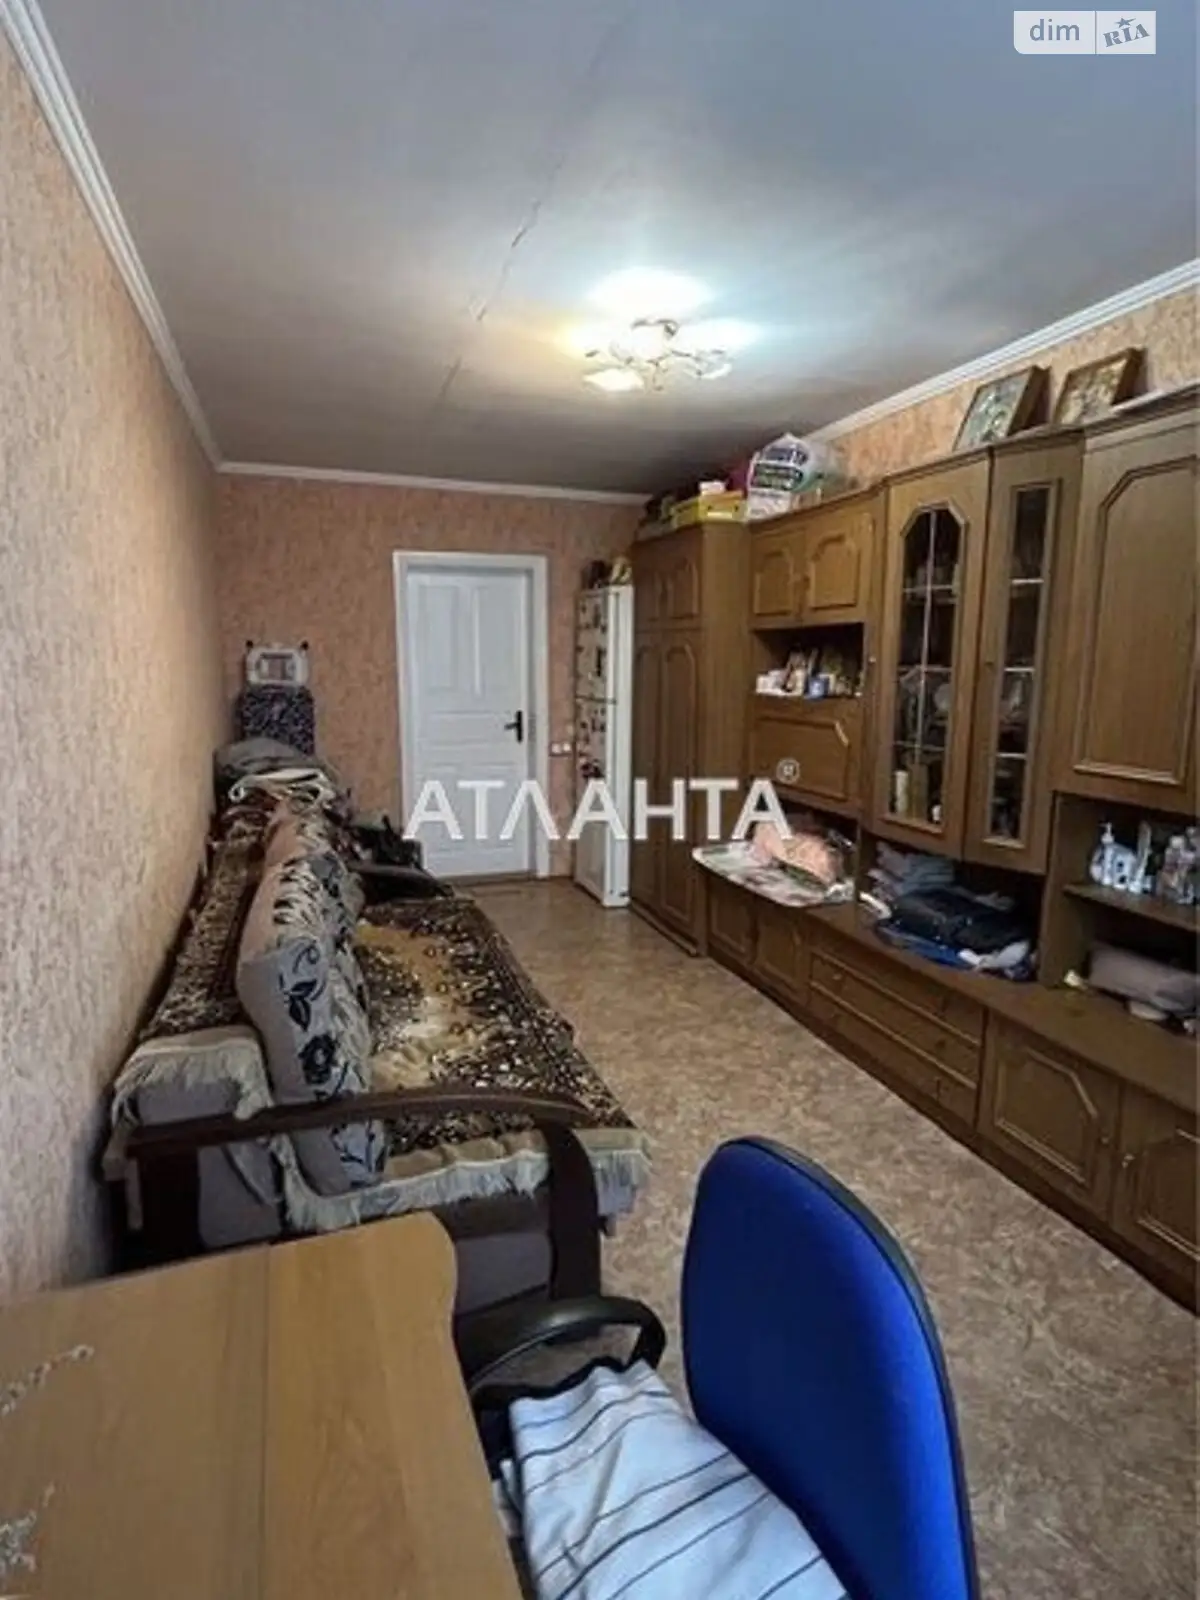 Продается комната 90 кв. м в Одессе, цена: 9500 $ - фото 1